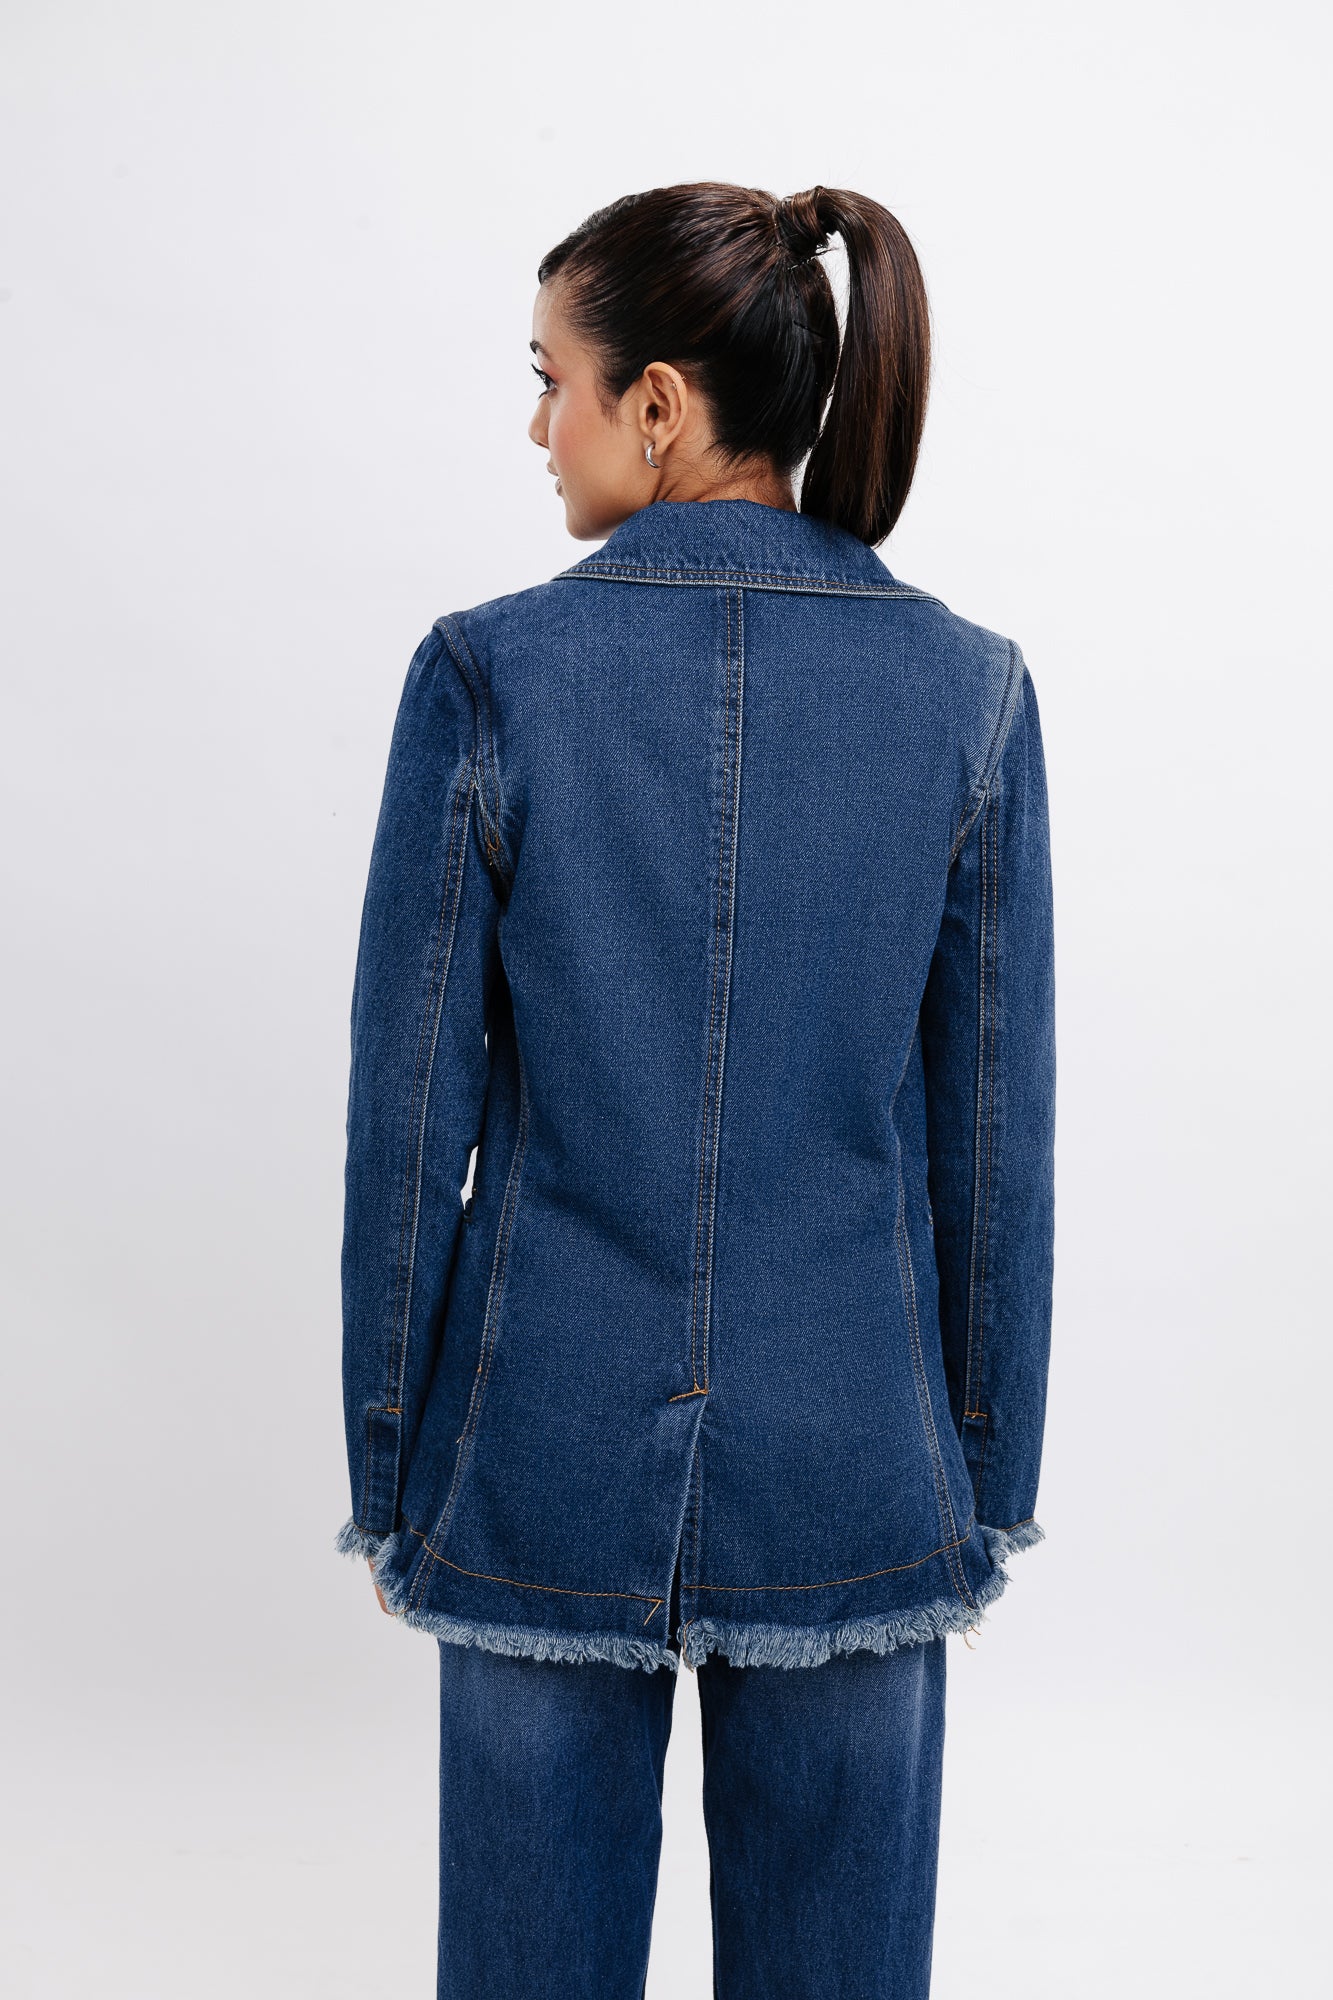 Buy Women Denim Jackets - Oversized, Cropped | Unisex Jacket - FREAKINS